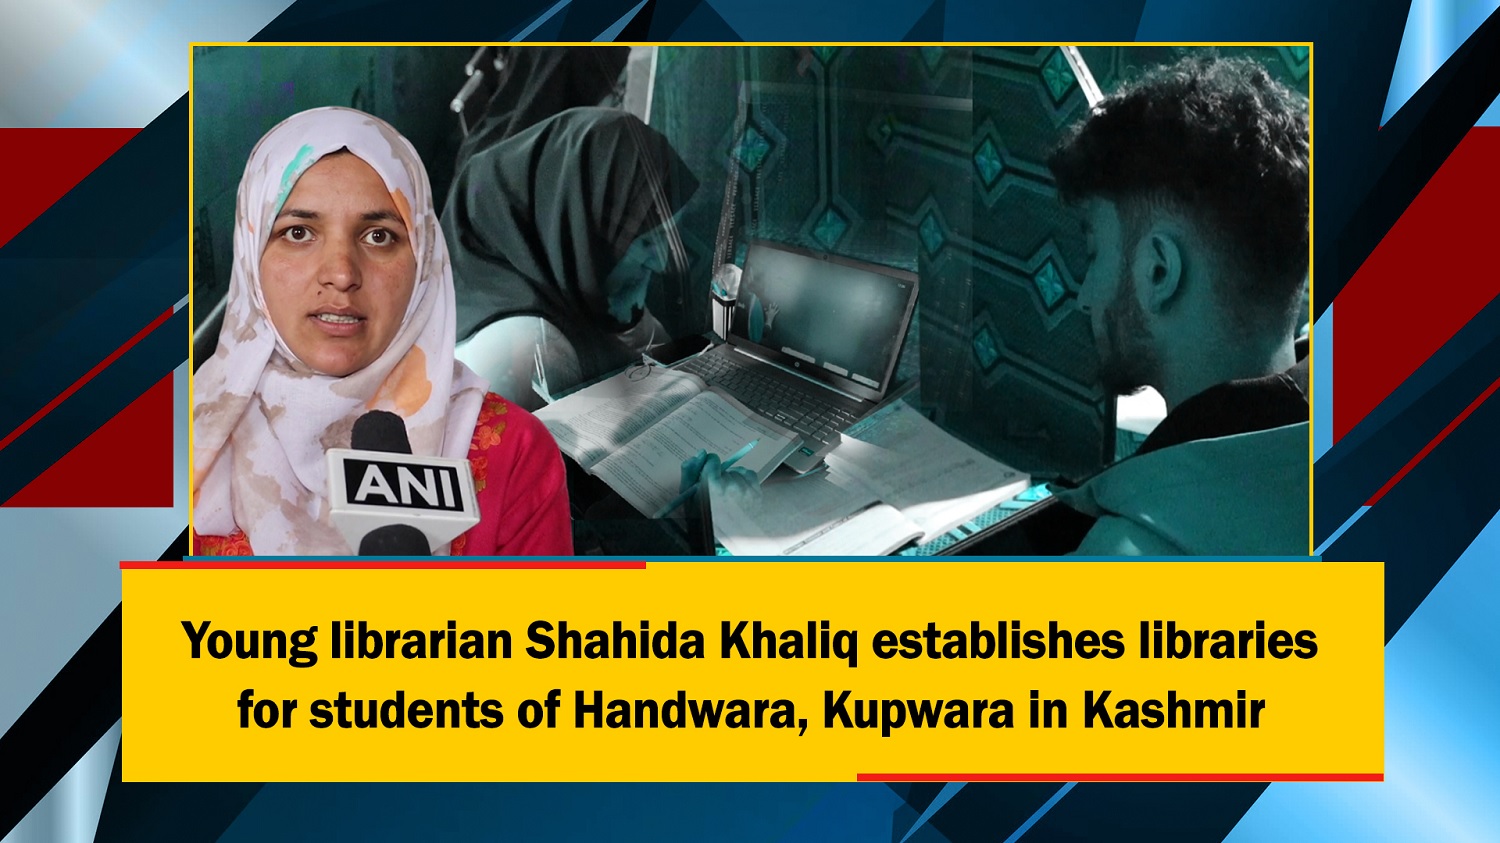 Young librarian Shahida Khaliq establishes libraries for students of Handwara, Kupwara in Kashmir